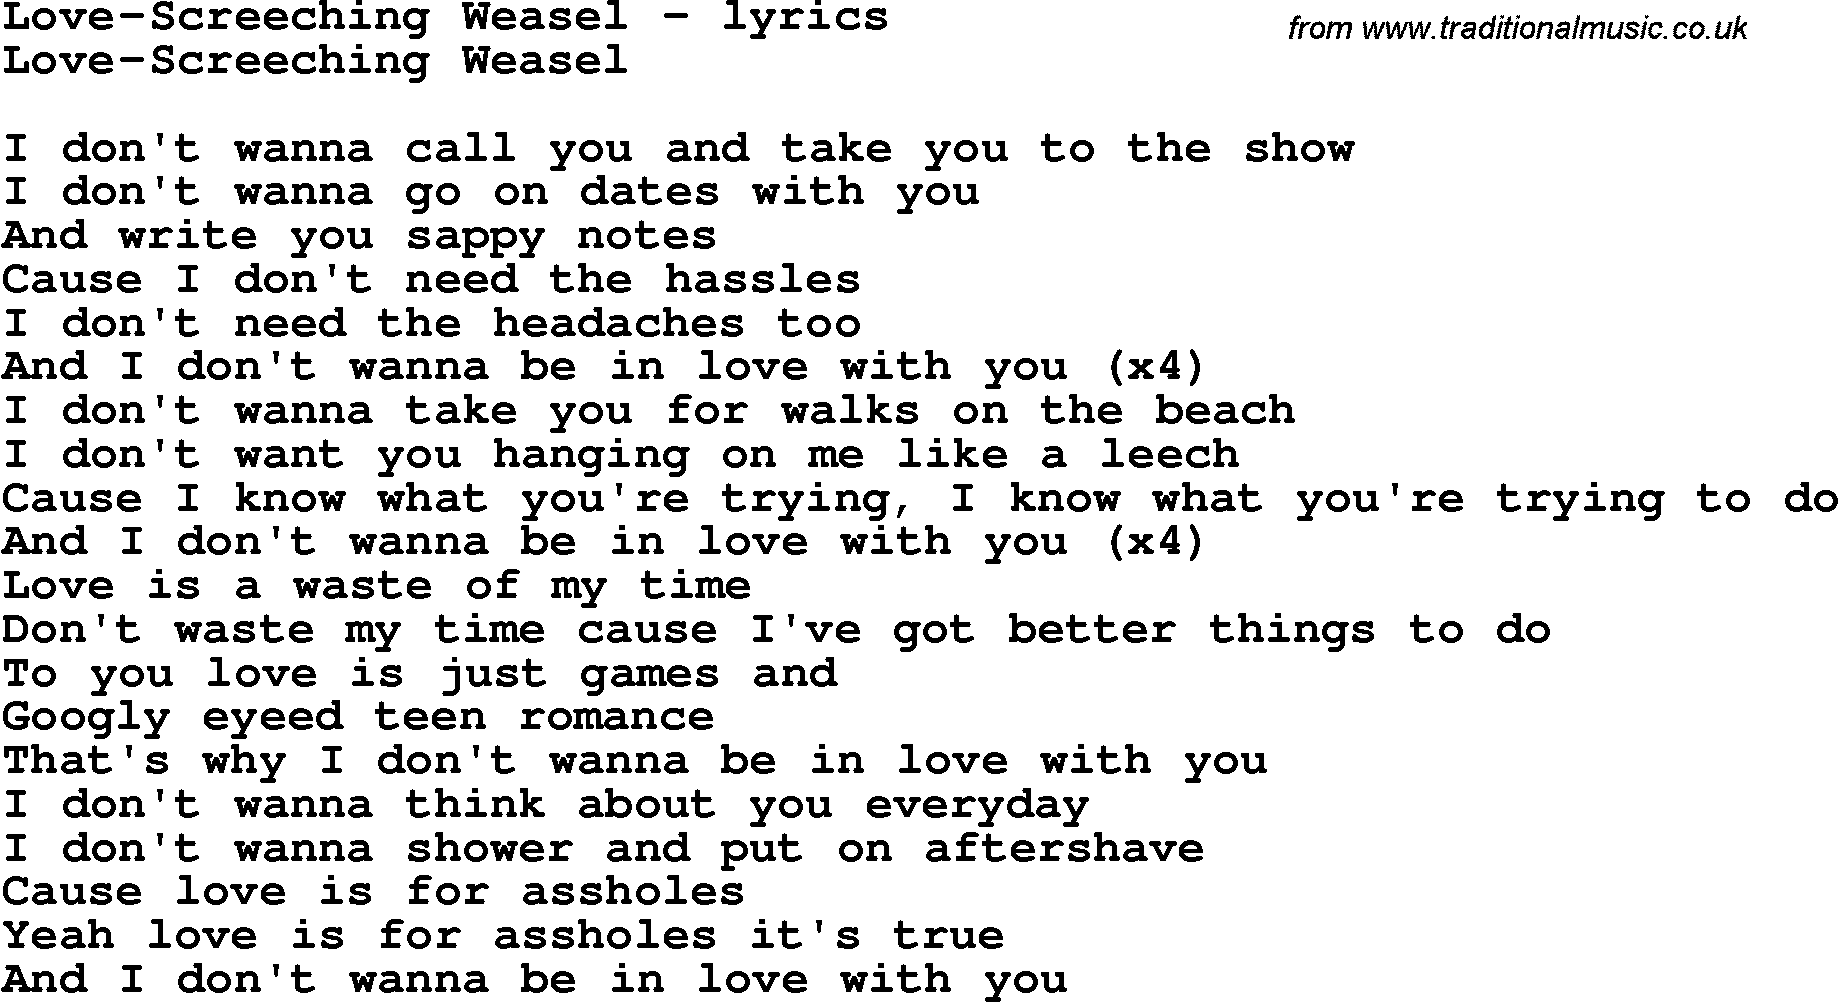 Love Song Lyrics for: Love-Screeching Weasel